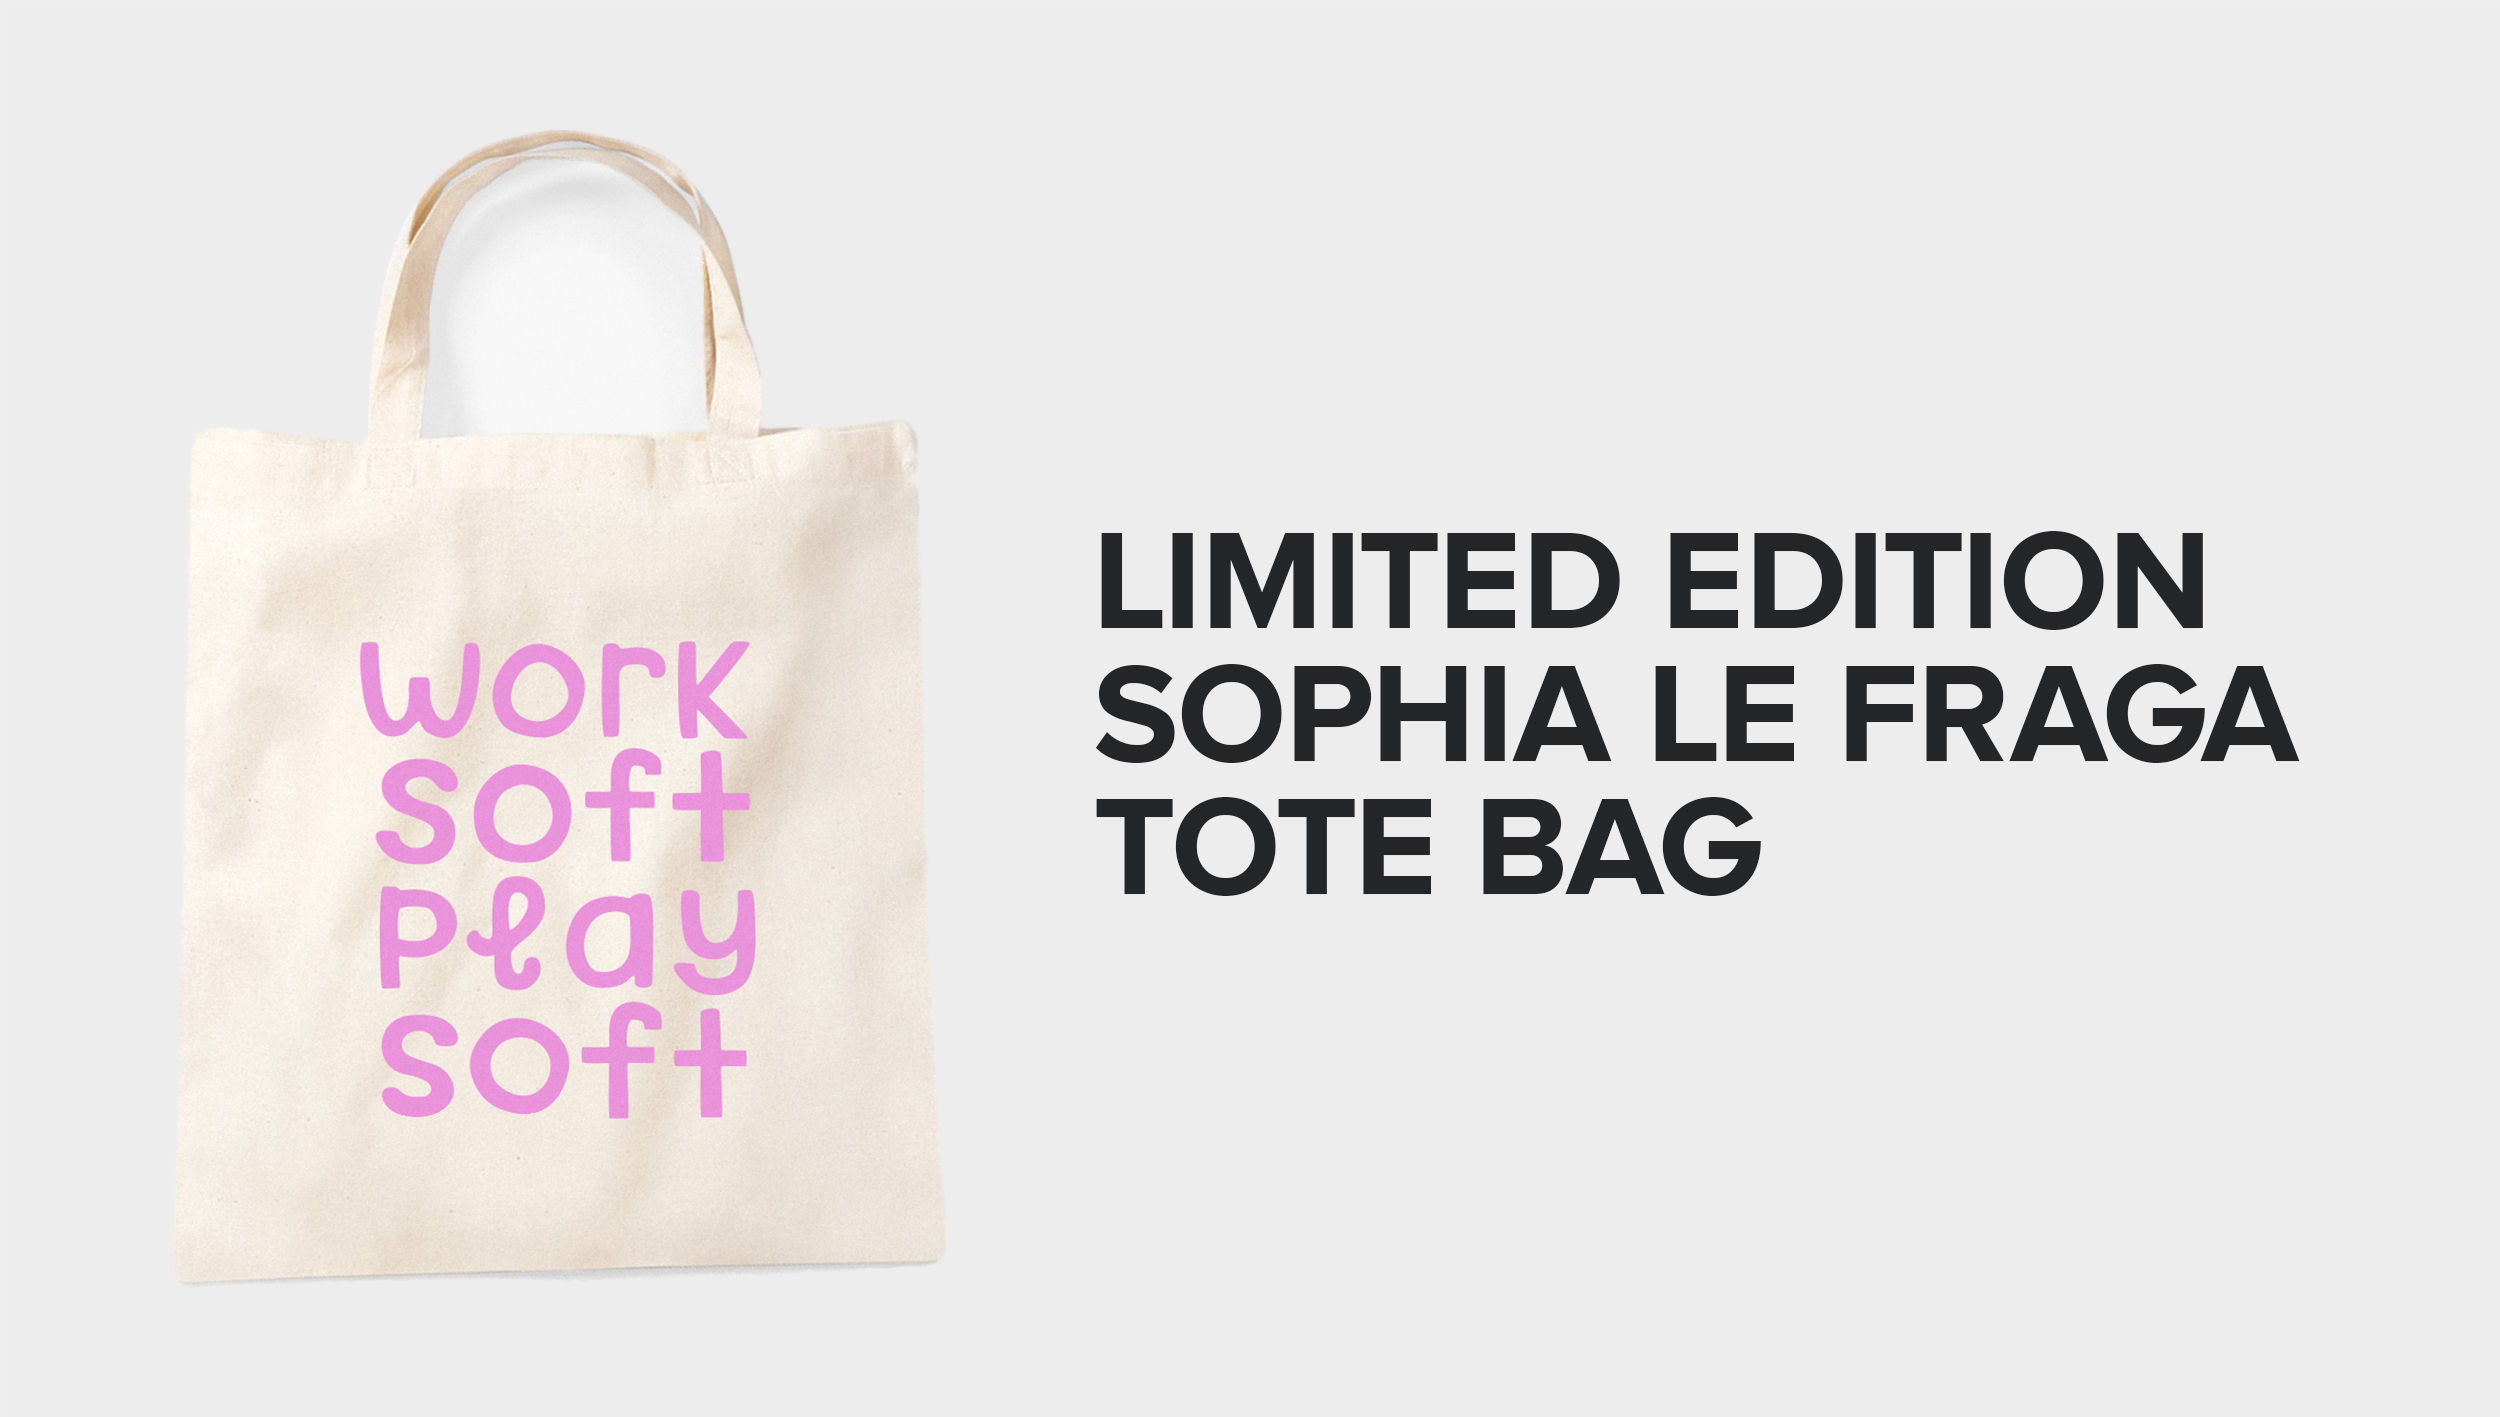 Limited Edition Sophia La Fraga Tote Bag